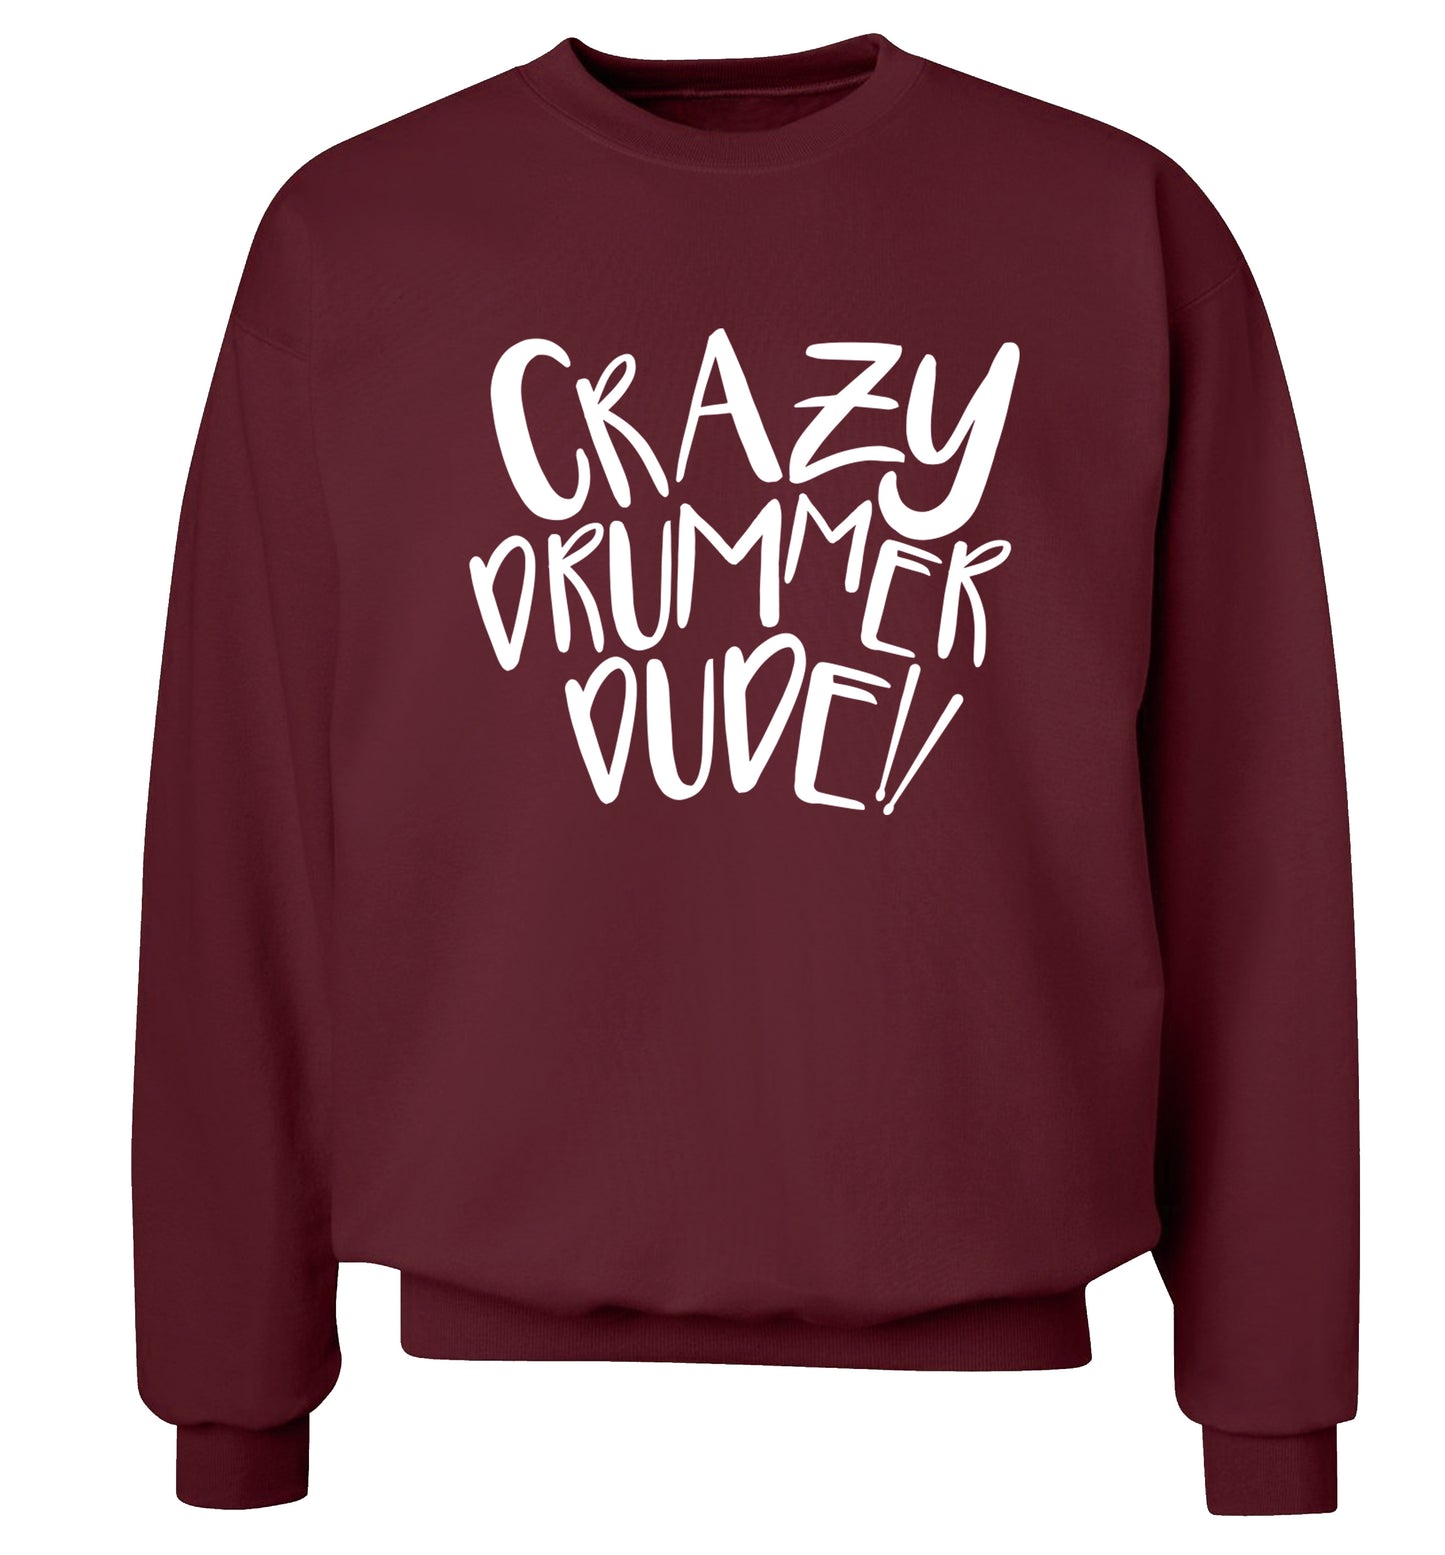 Crazy drummer dude Adult's unisex maroon Sweater 2XL